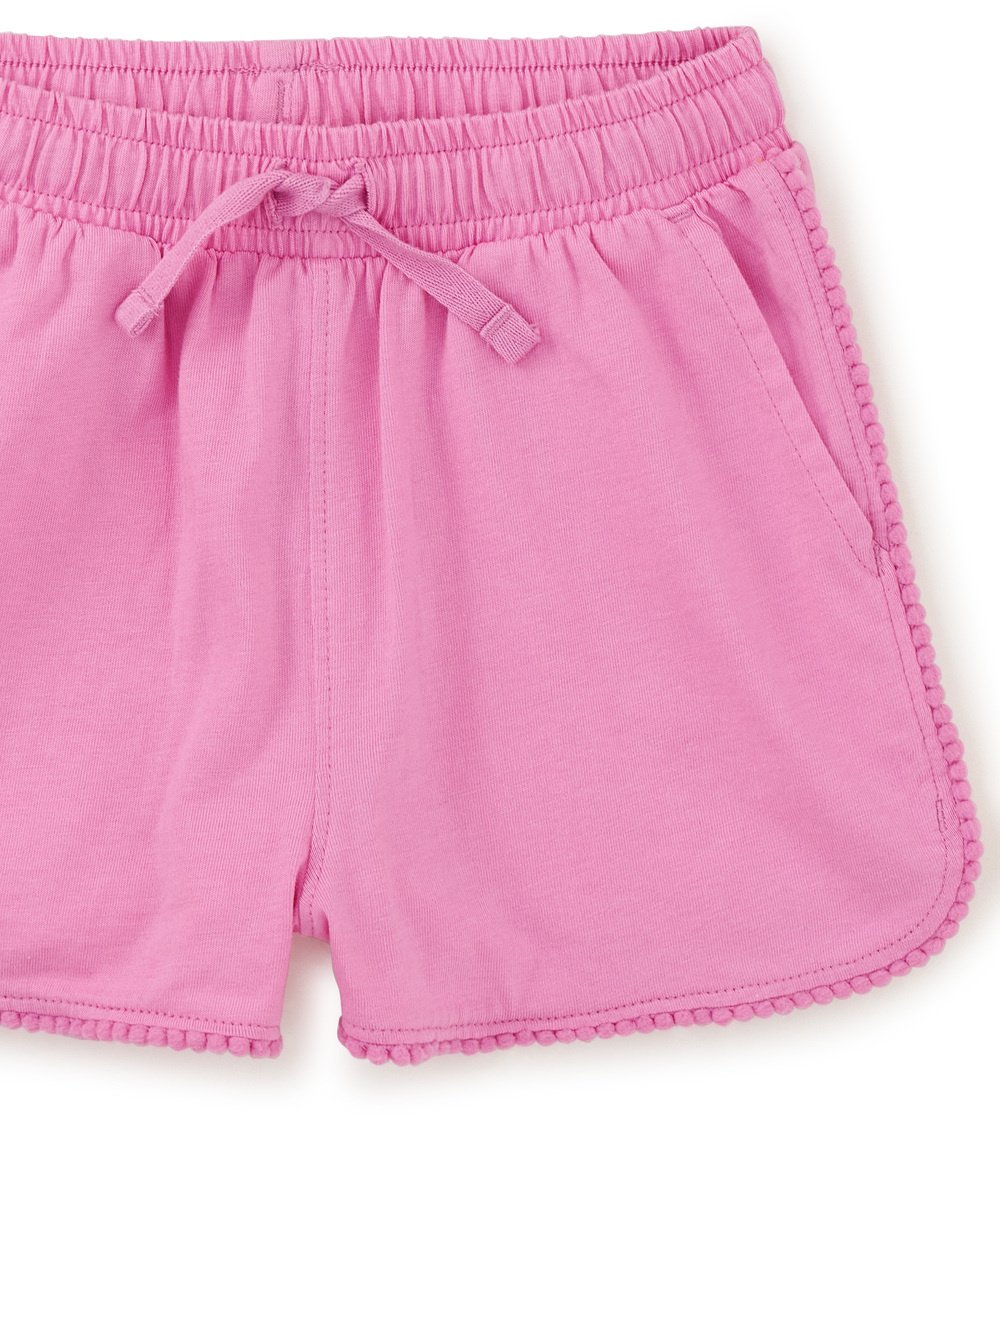 Tea Collection Pom-Pom Gym Shorts Perennial Pink